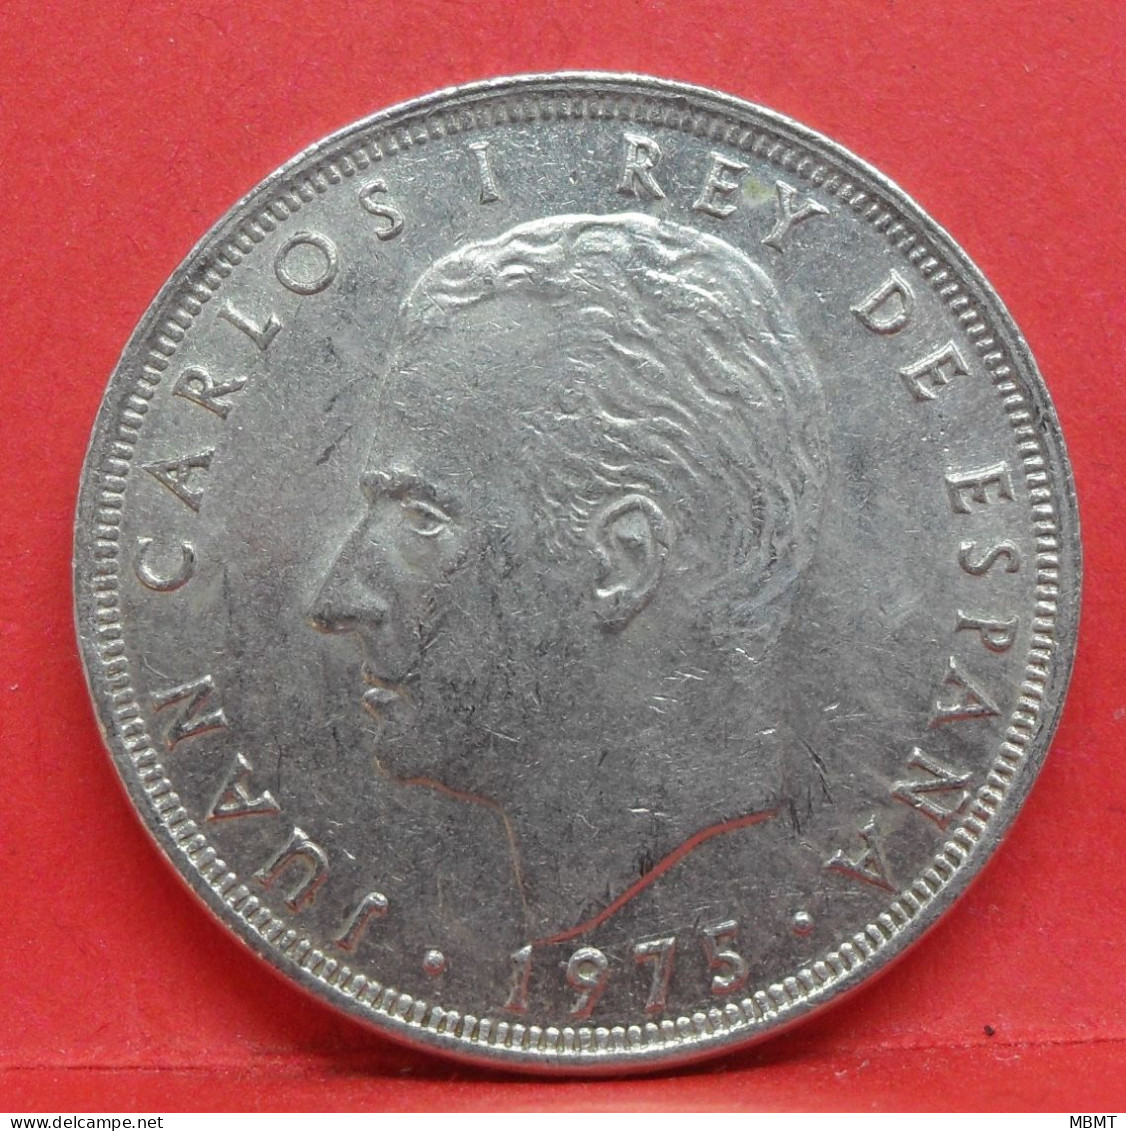 25 Pesetas 1975 étoile 80 - TTB - Pièce Monnaie Espagne - Article N°2452 - 25 Pesetas